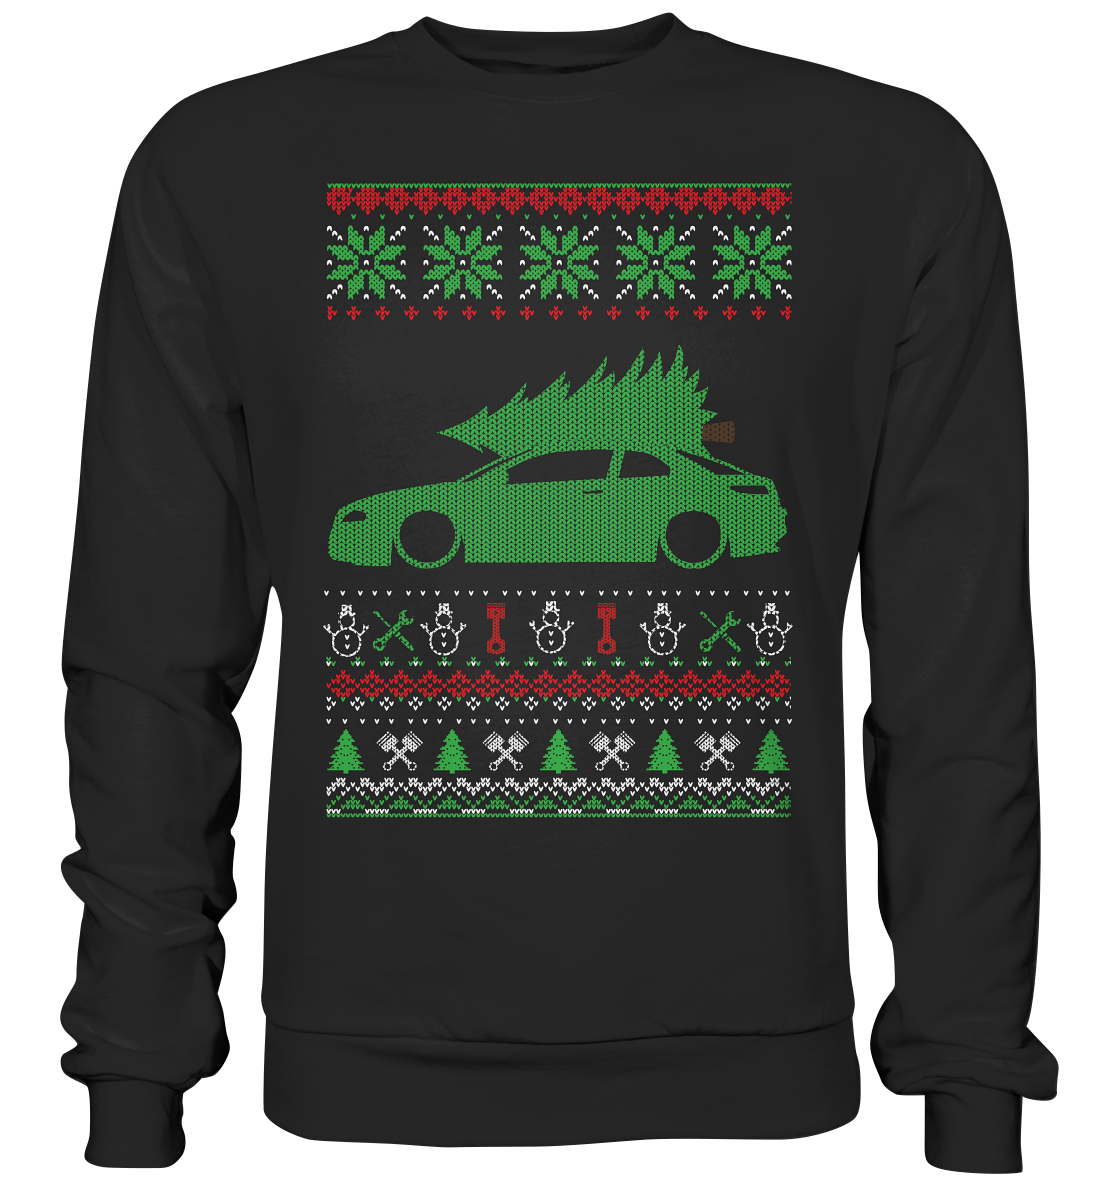 CODUGLY_ARGKGTC - Premium Sweatshirt